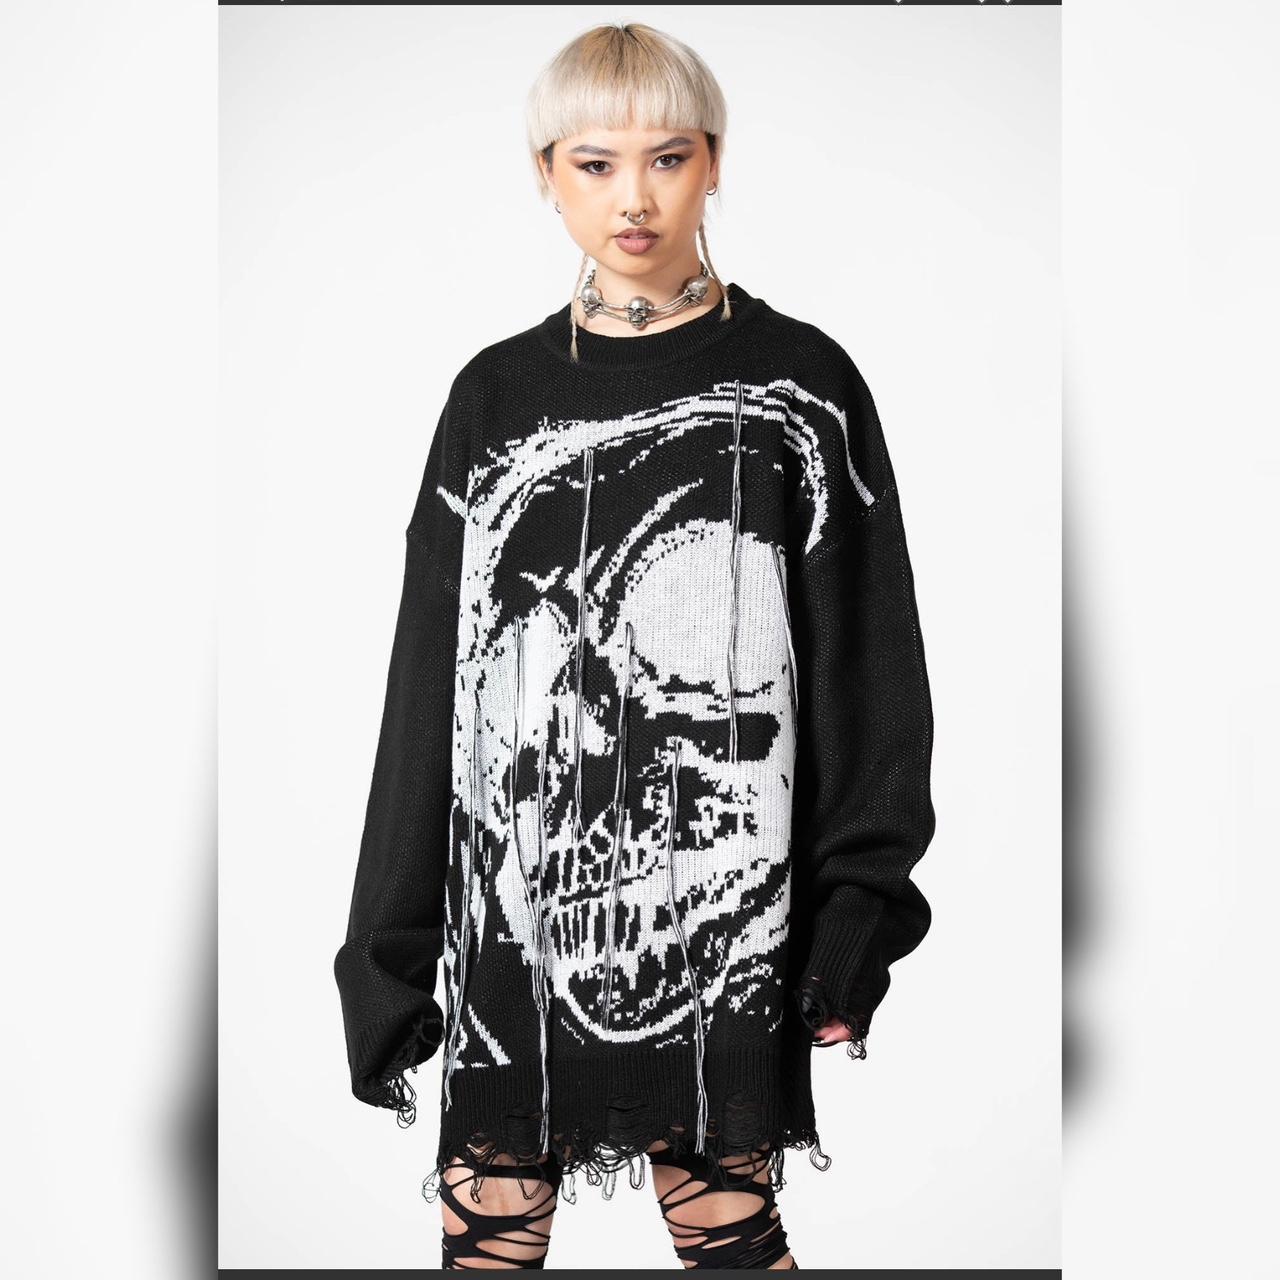 Plus Size Hoodies & Sweatshirts for Women: Skull & Tunic Sweaters